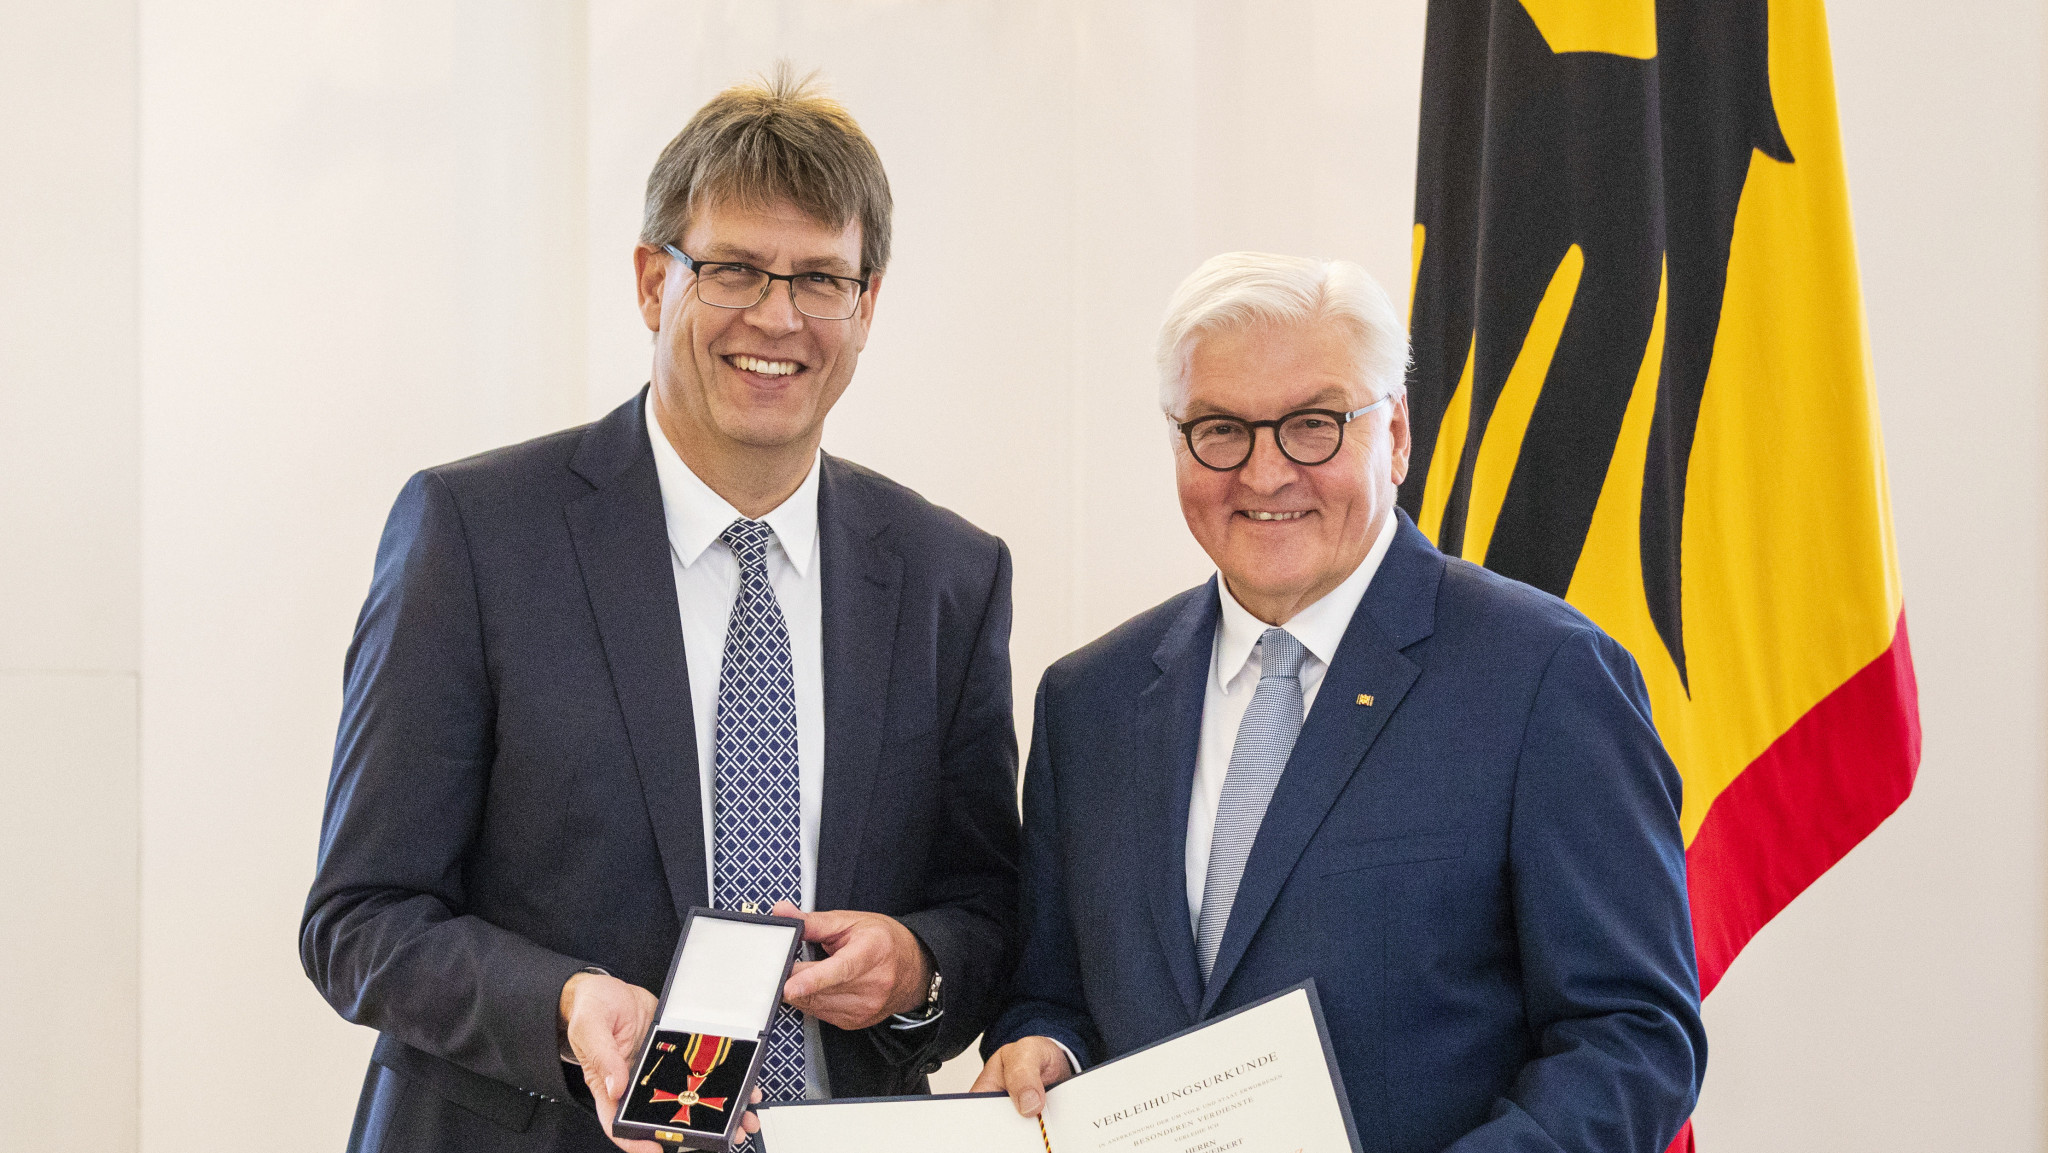 Thomas Weikert, left, received the special award from Frank-Walter Steinmeier ©ITTF